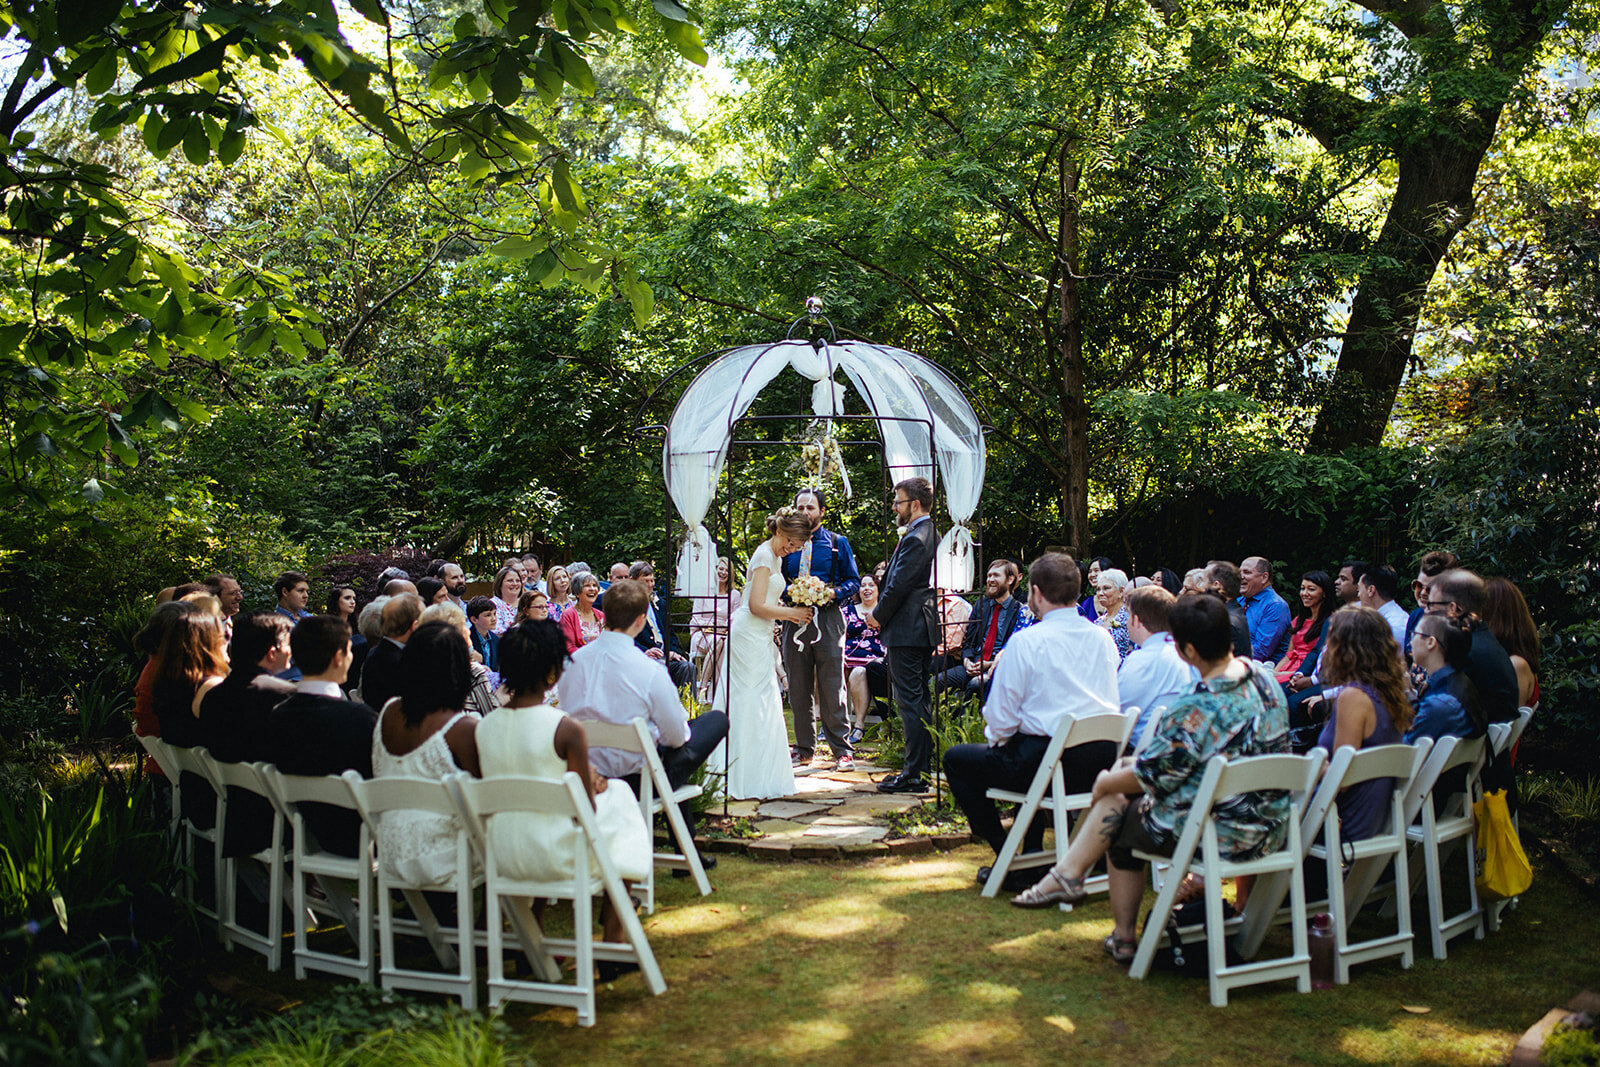 Circular backyard wedding ceremony in Atlanta GA Shawnee Custalow Queer Wedding Photographer